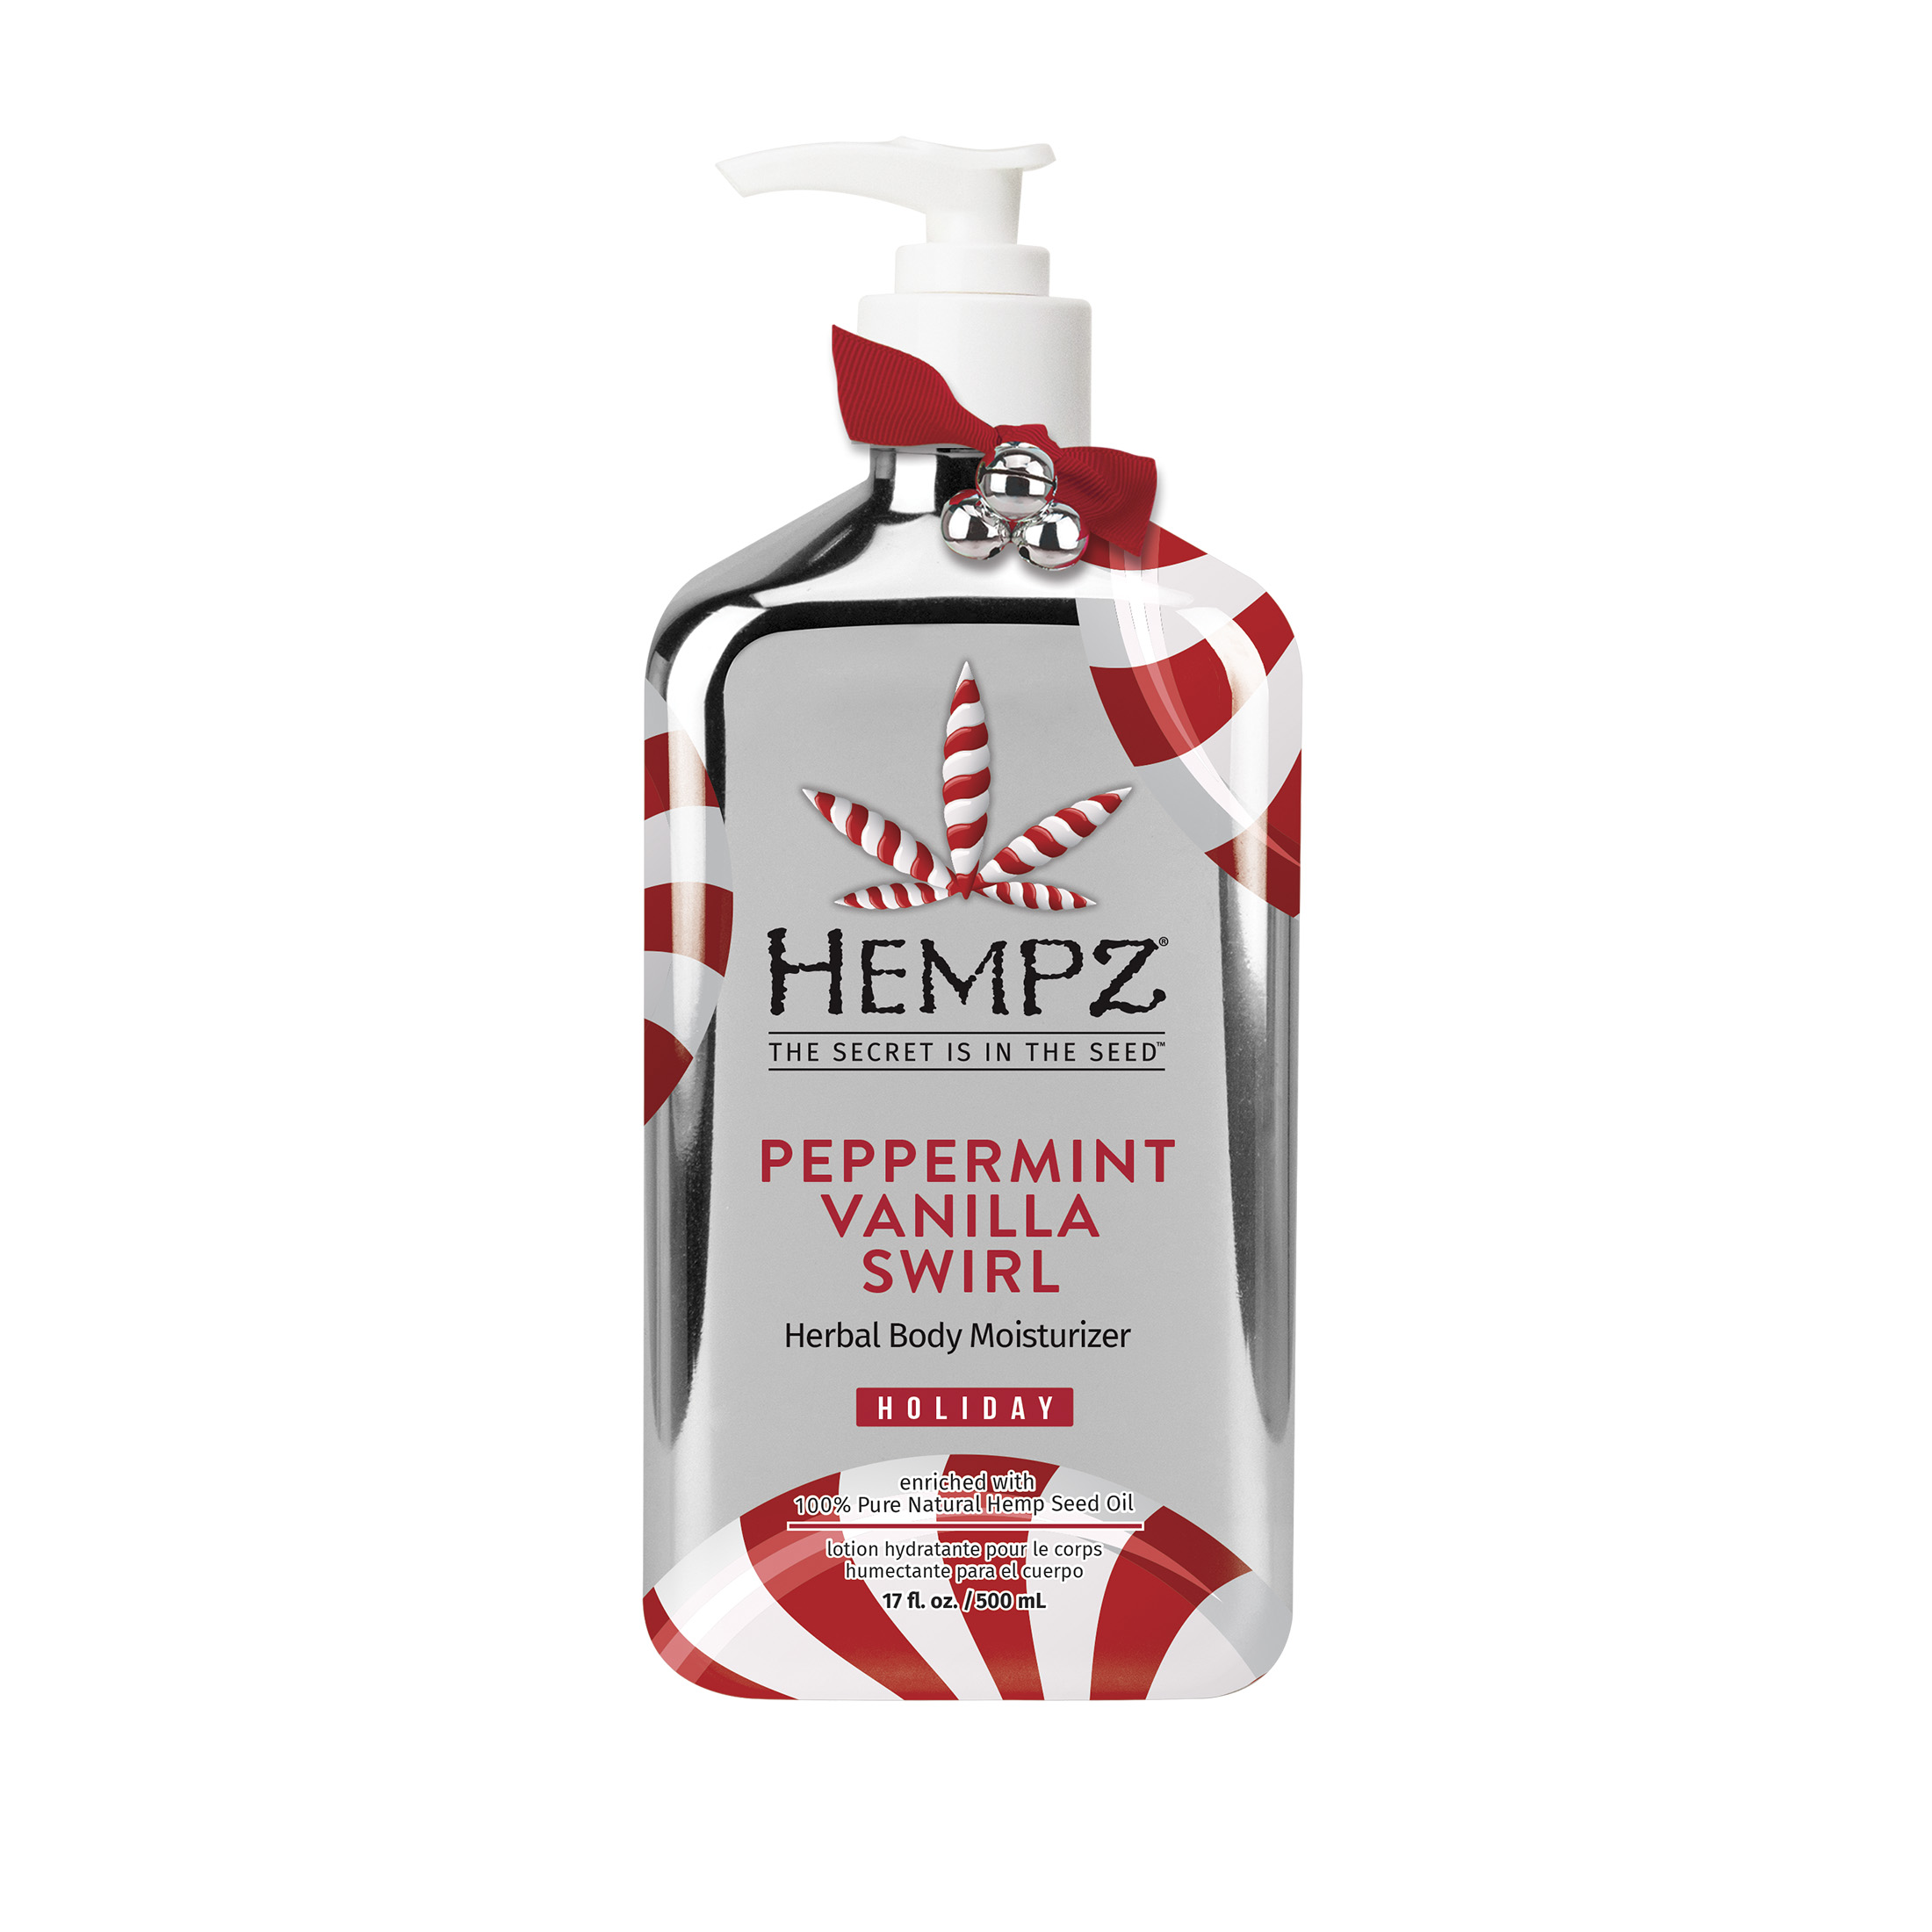 Hempz Herbal Body Moisturizer for Dry Skin, Peppermint Vanilla Swirl 17 fl oz - image 1 of 2